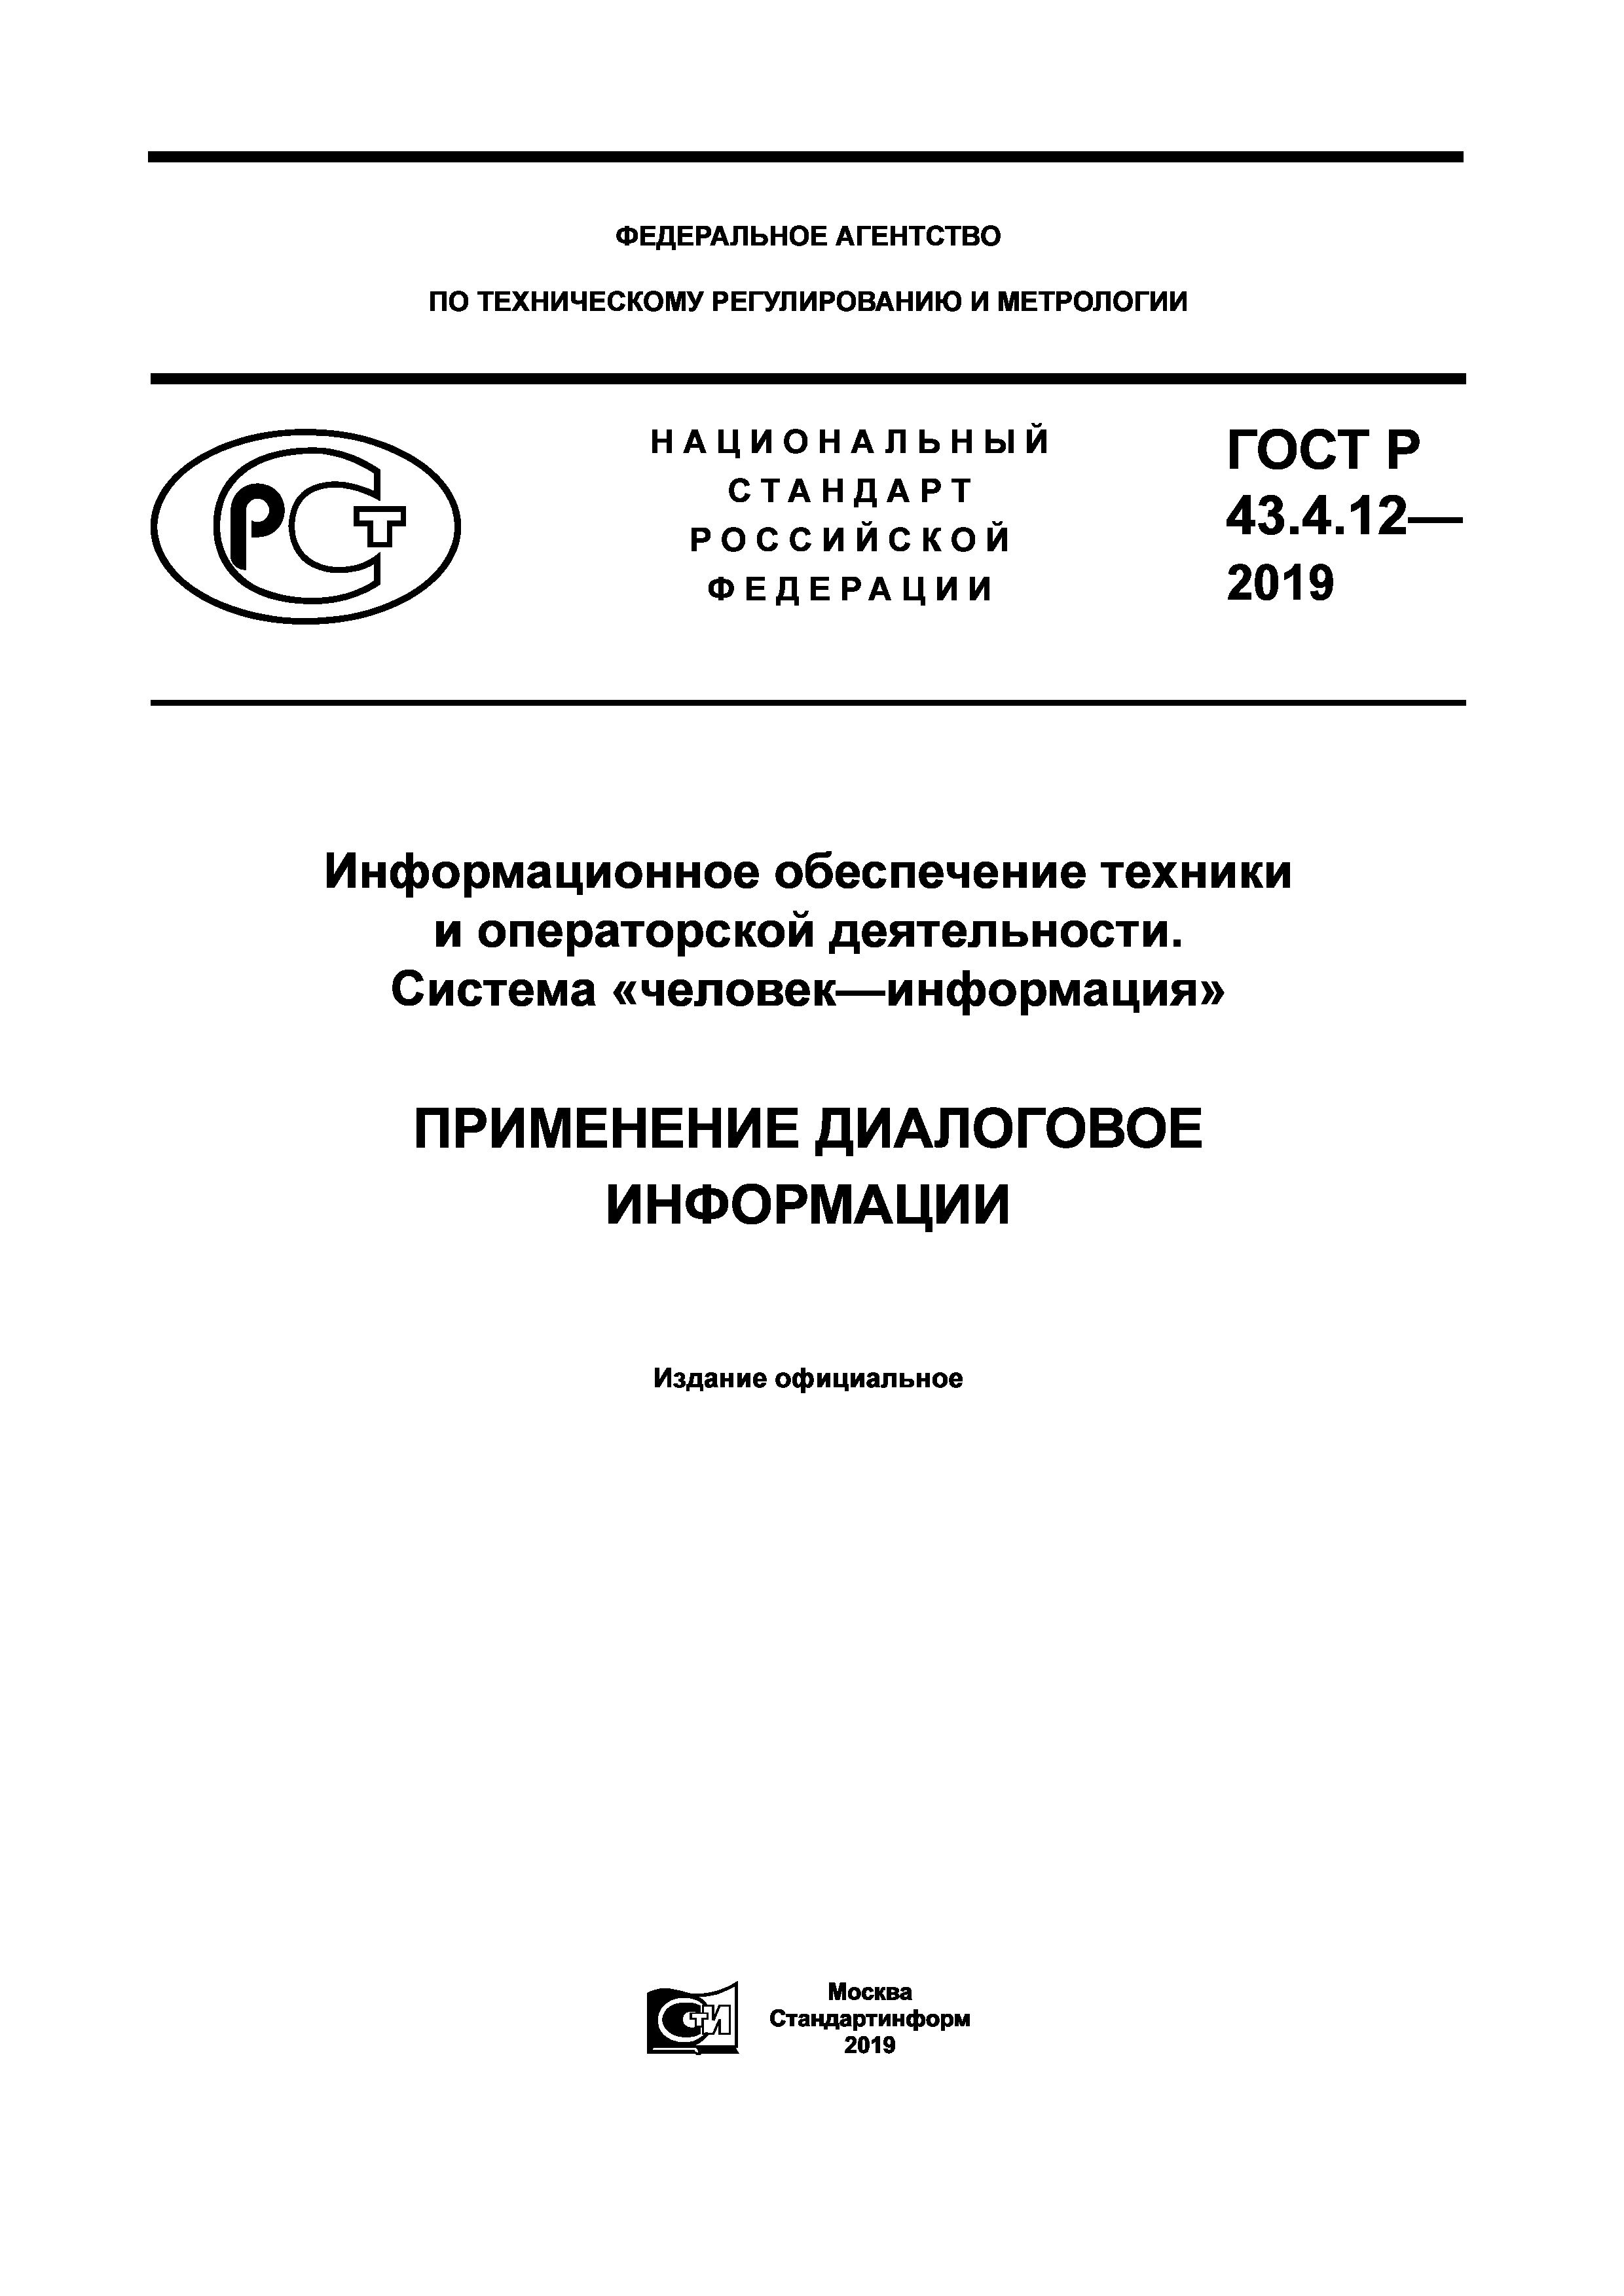 ГОСТ Р 43.4.12-2019